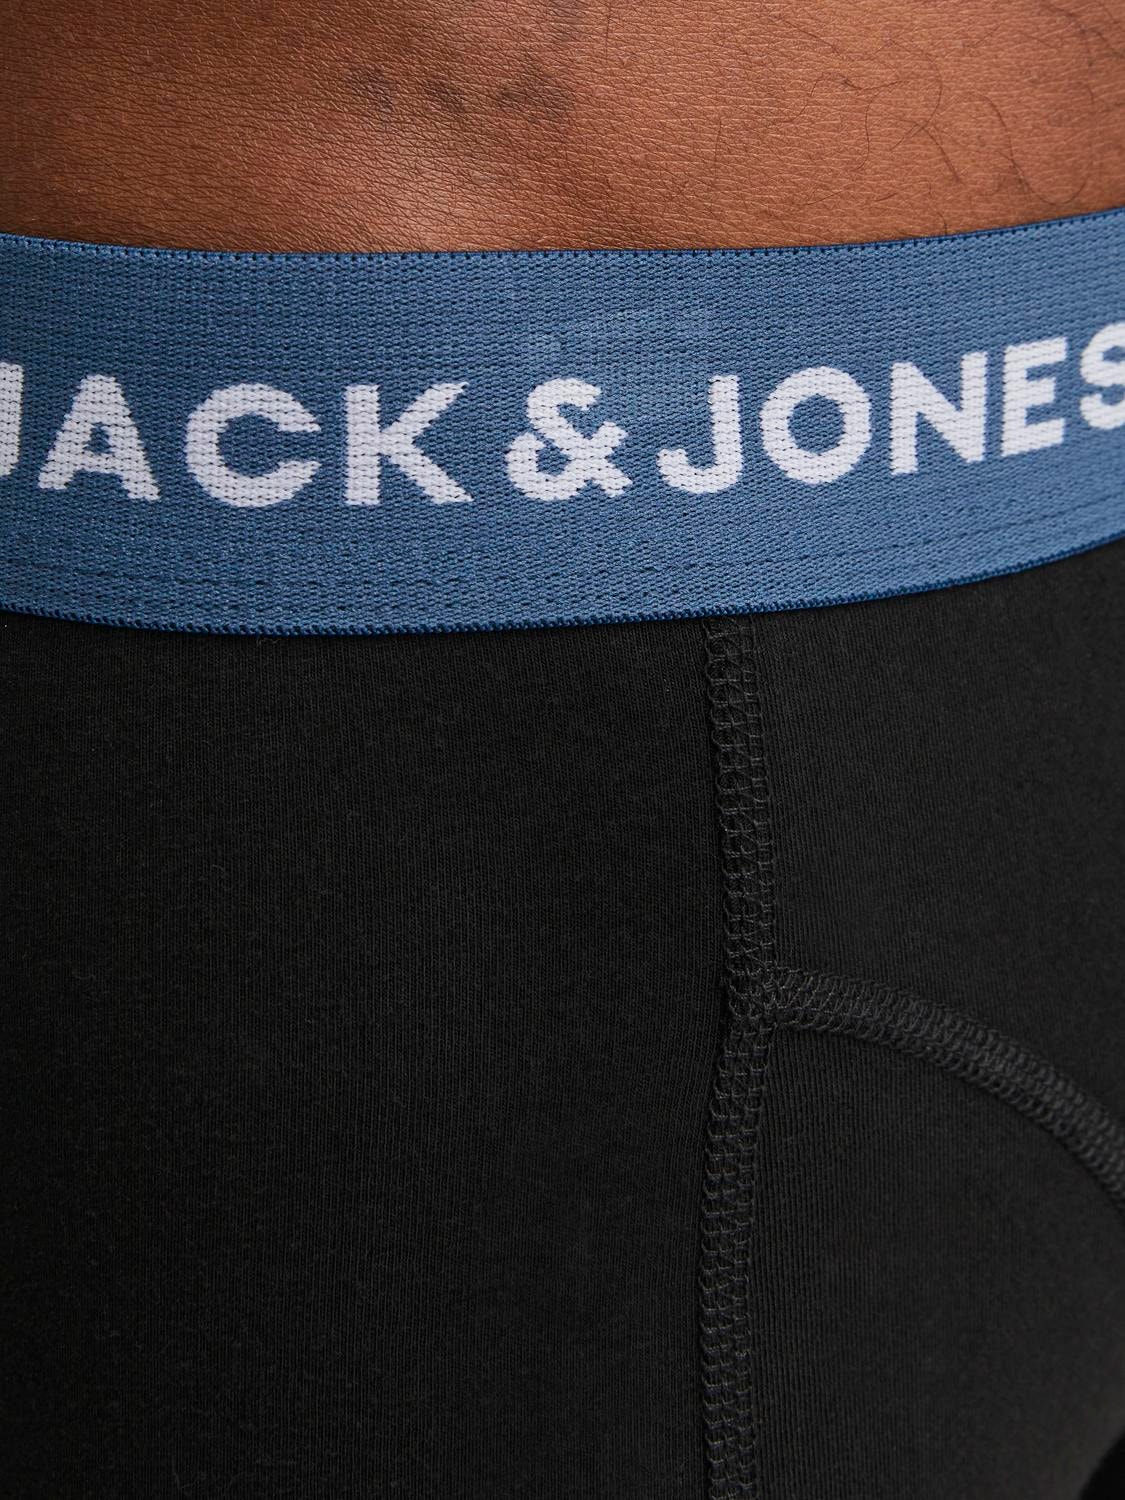 Jack & Jones 5-pakning Underbukser -Black - 12254366